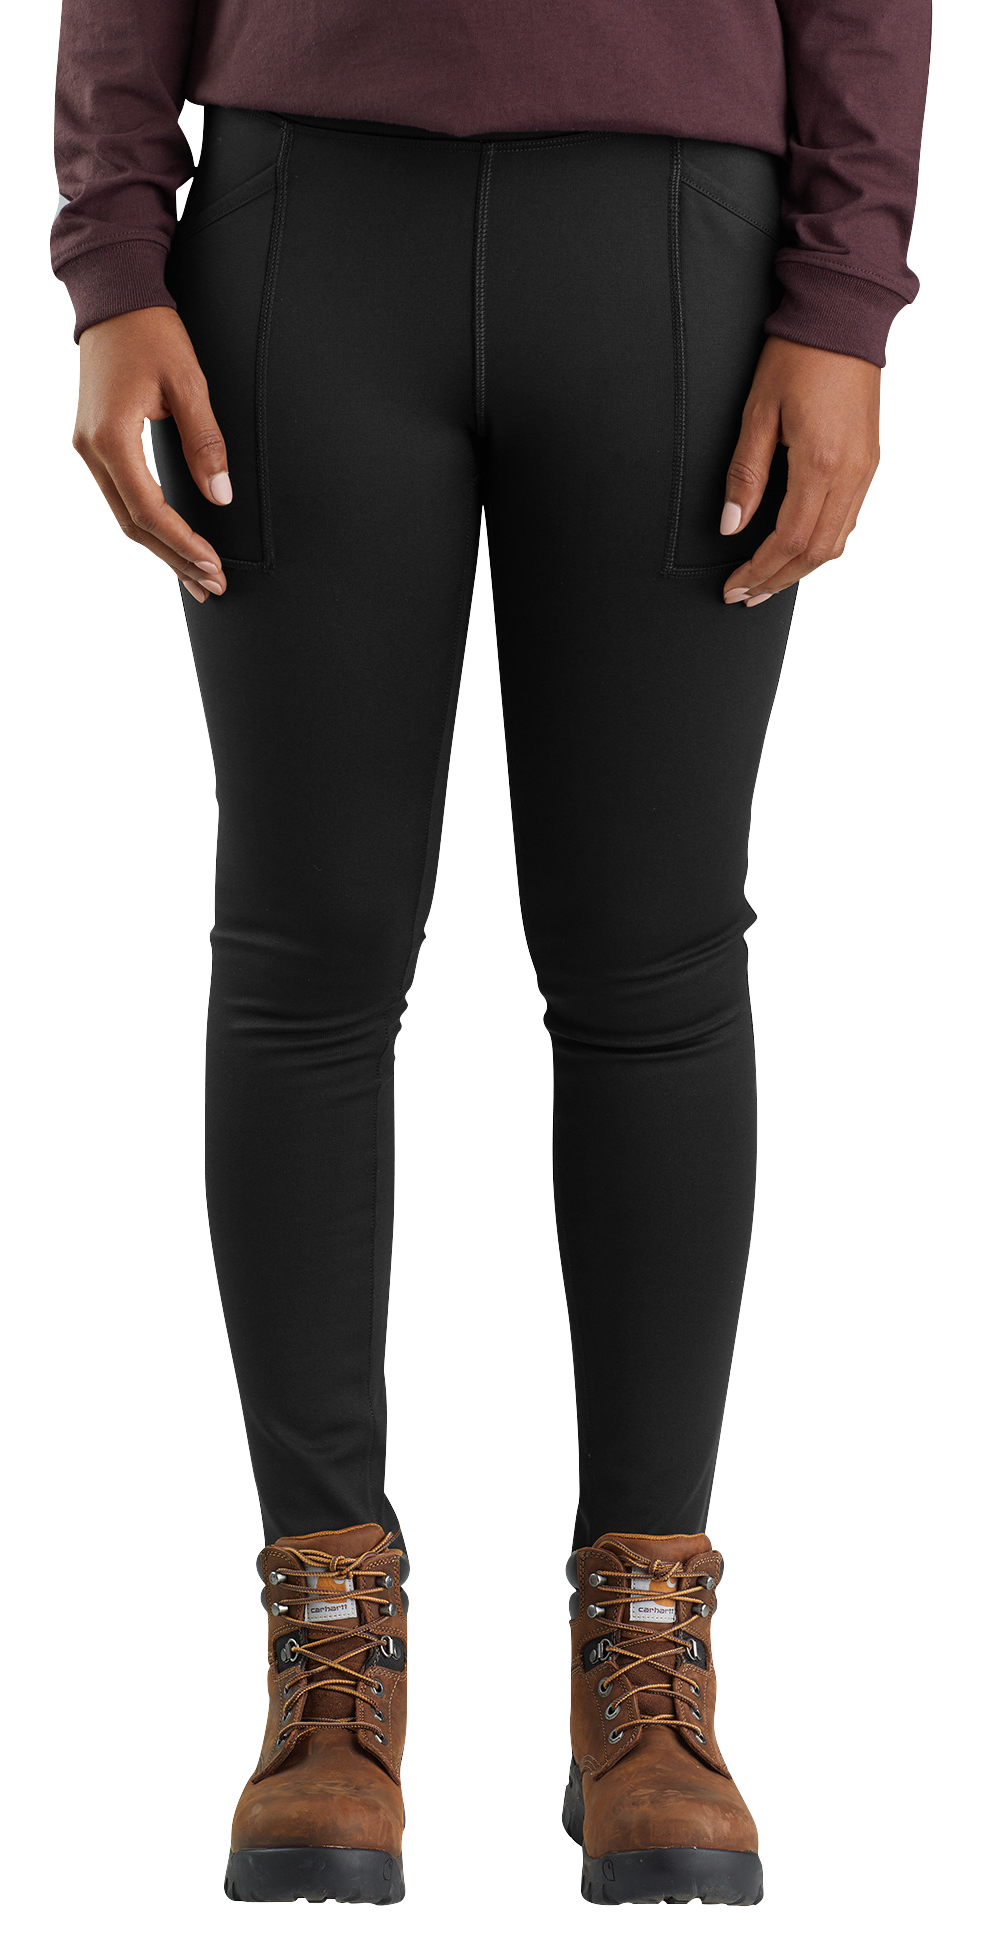 Carhartt Women's Medium Black Heather Nylon/Poly/Spandex Force Utility  Legging Pant 102482-013 - The Home Depot